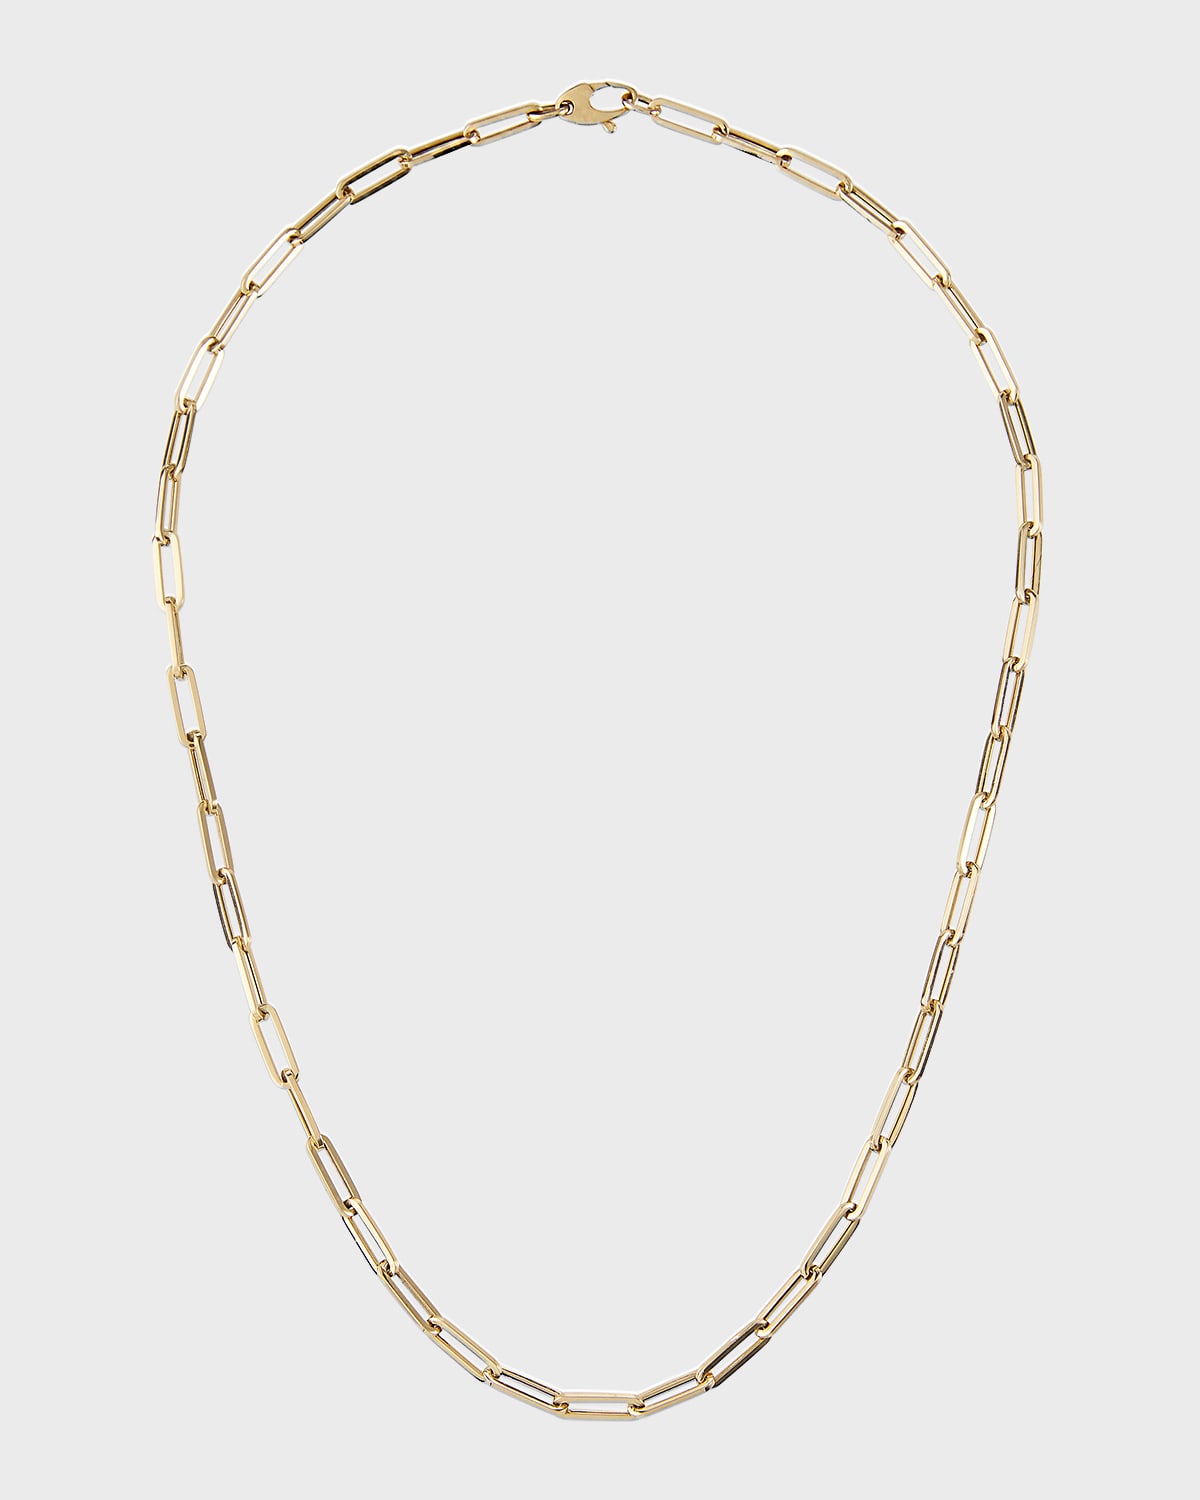 Kastel Jewelry 14k Small Link La Seta Necklace, 18"L